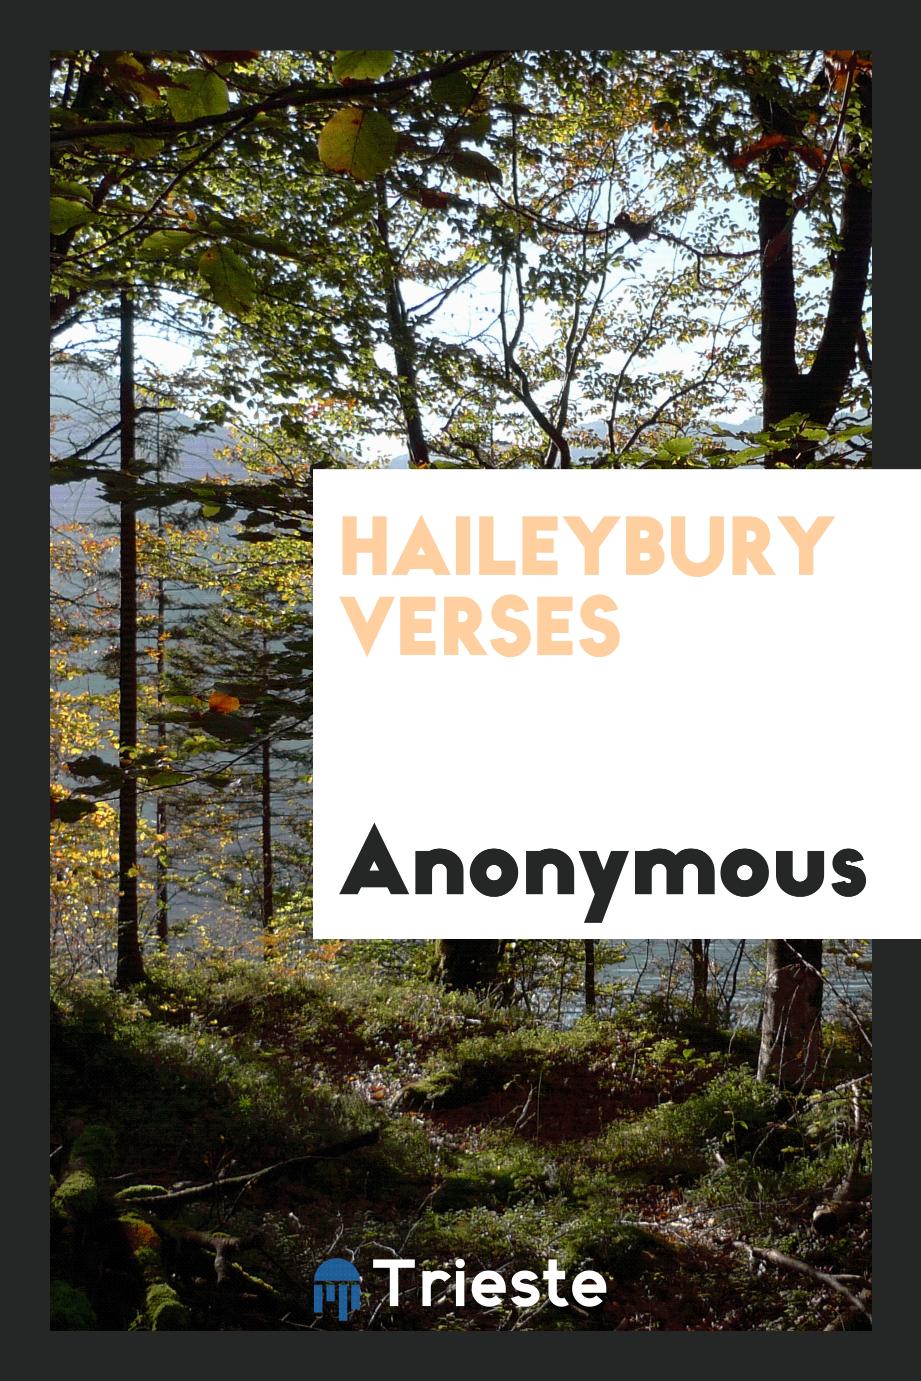 Haileybury verses